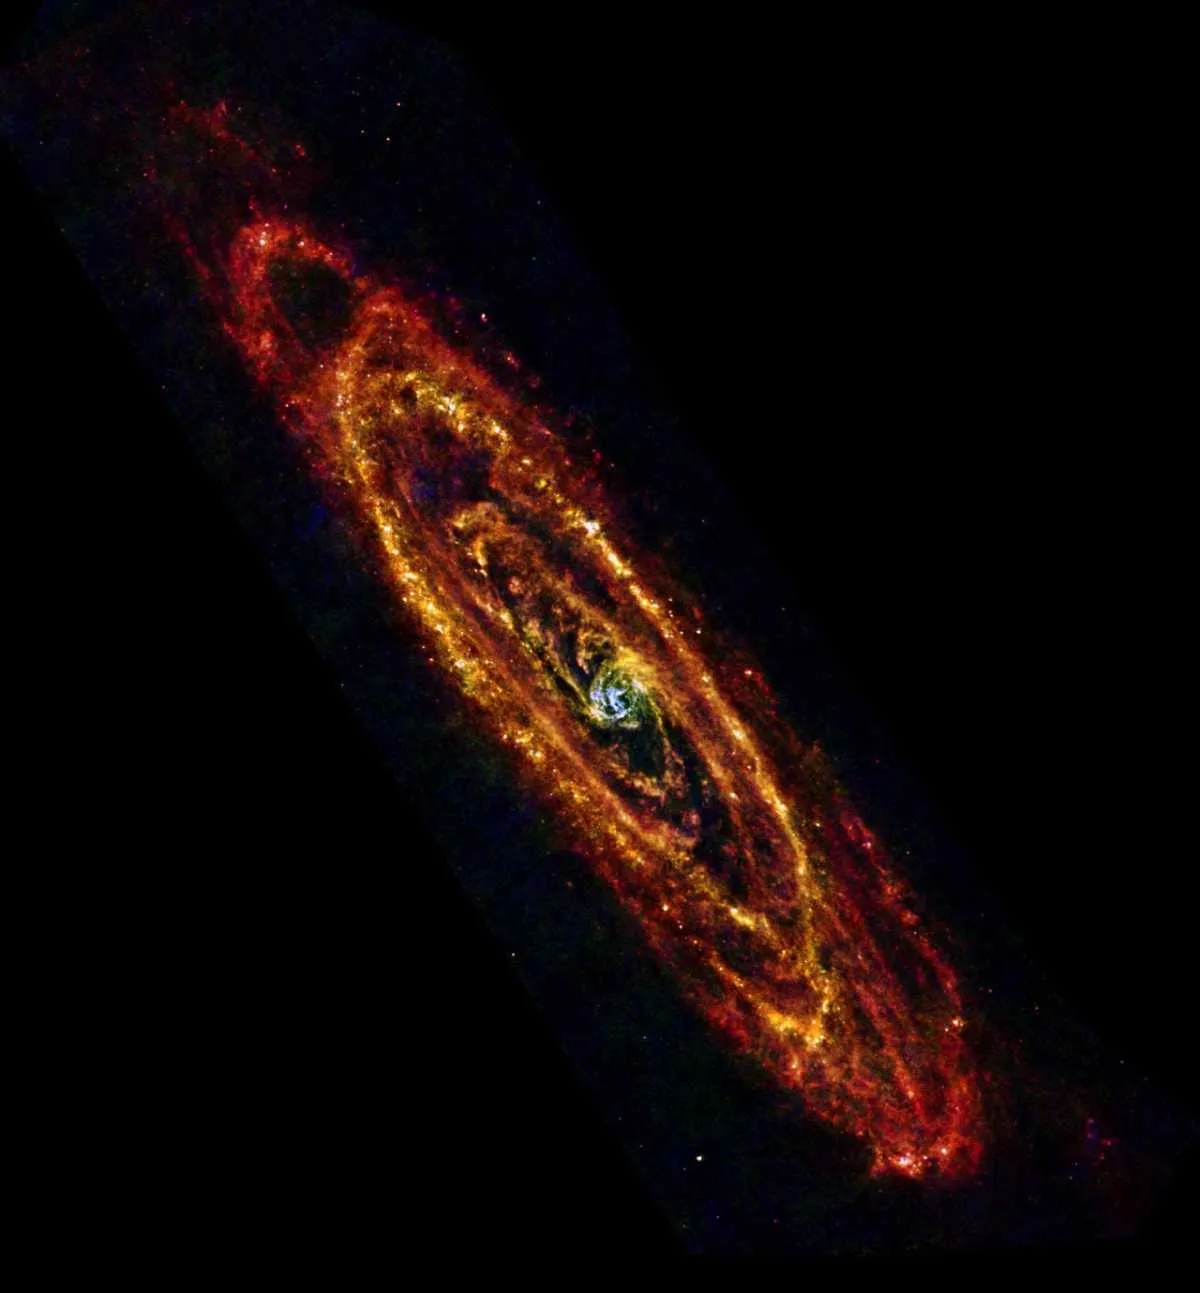 © ESA/Herschel/PACS & SPIRE Consortium, O. Krause, HSC, H. Linz